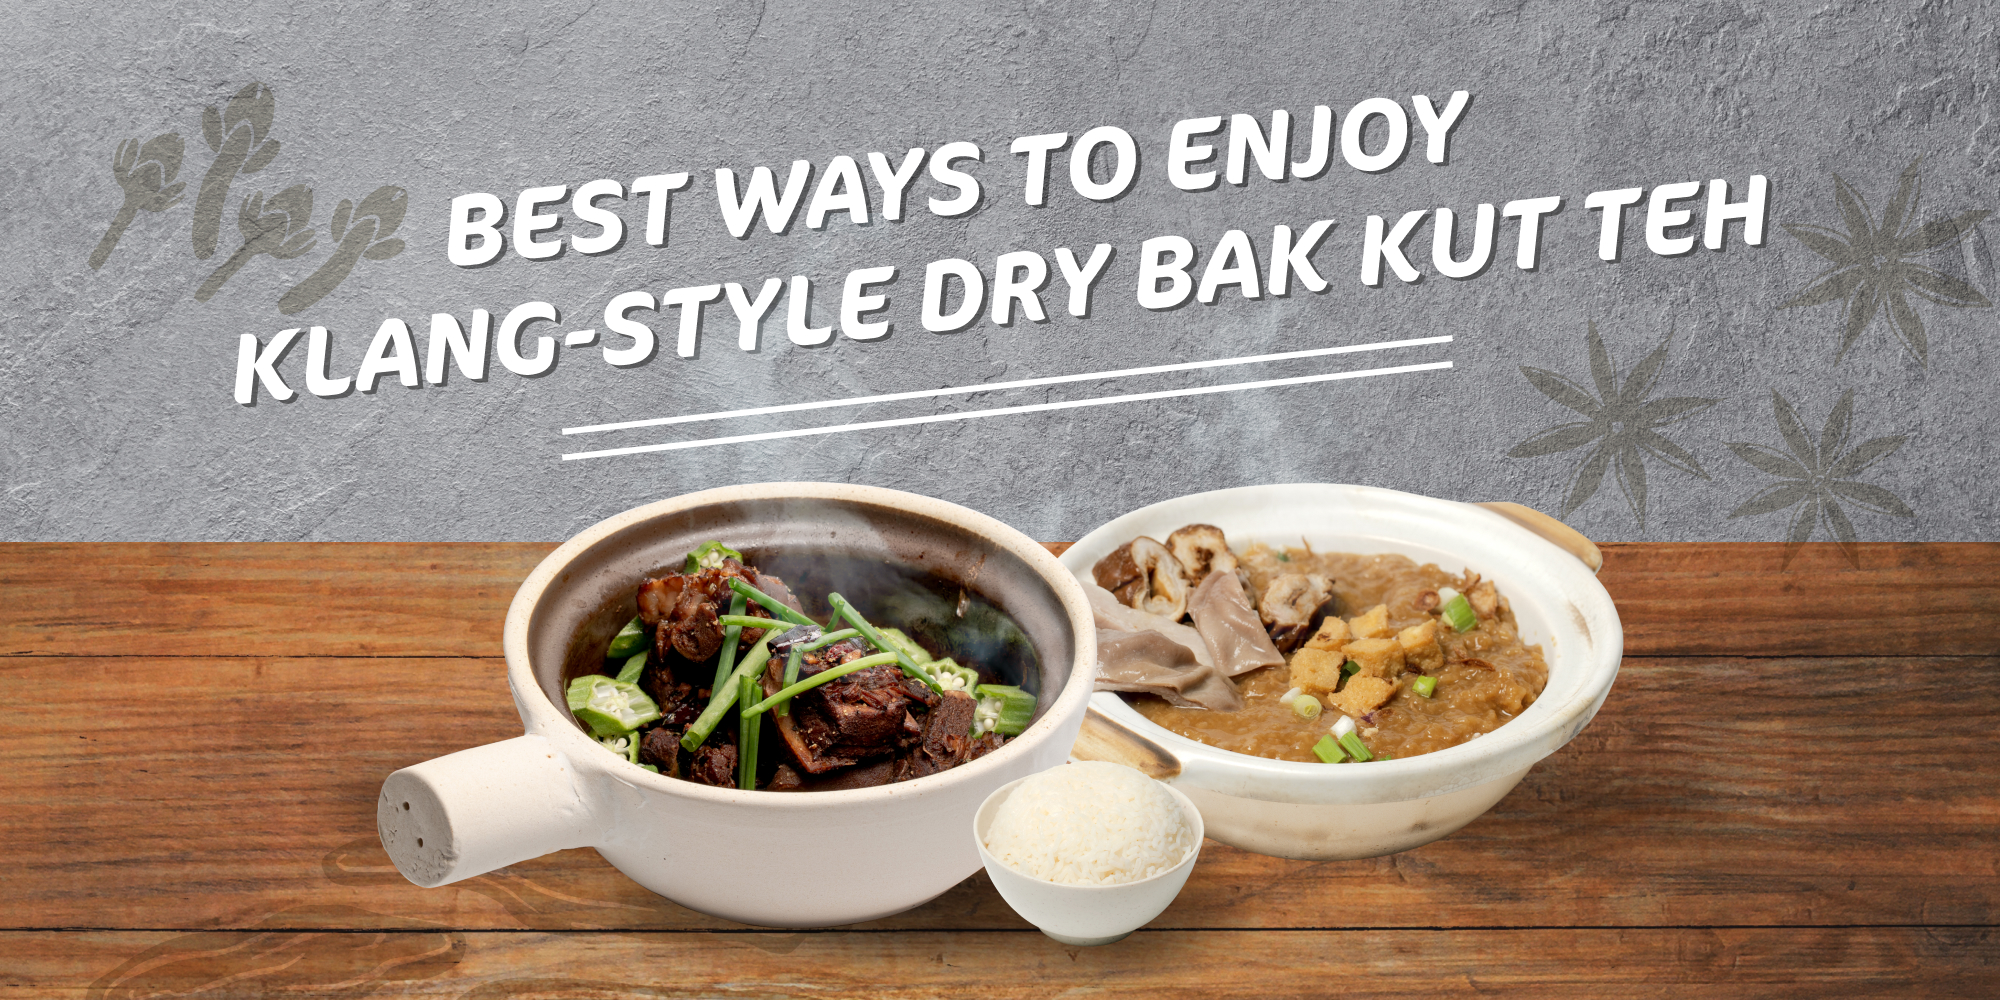 best-ways-to-enjoy-klang-style-dry-bak-kut-teh